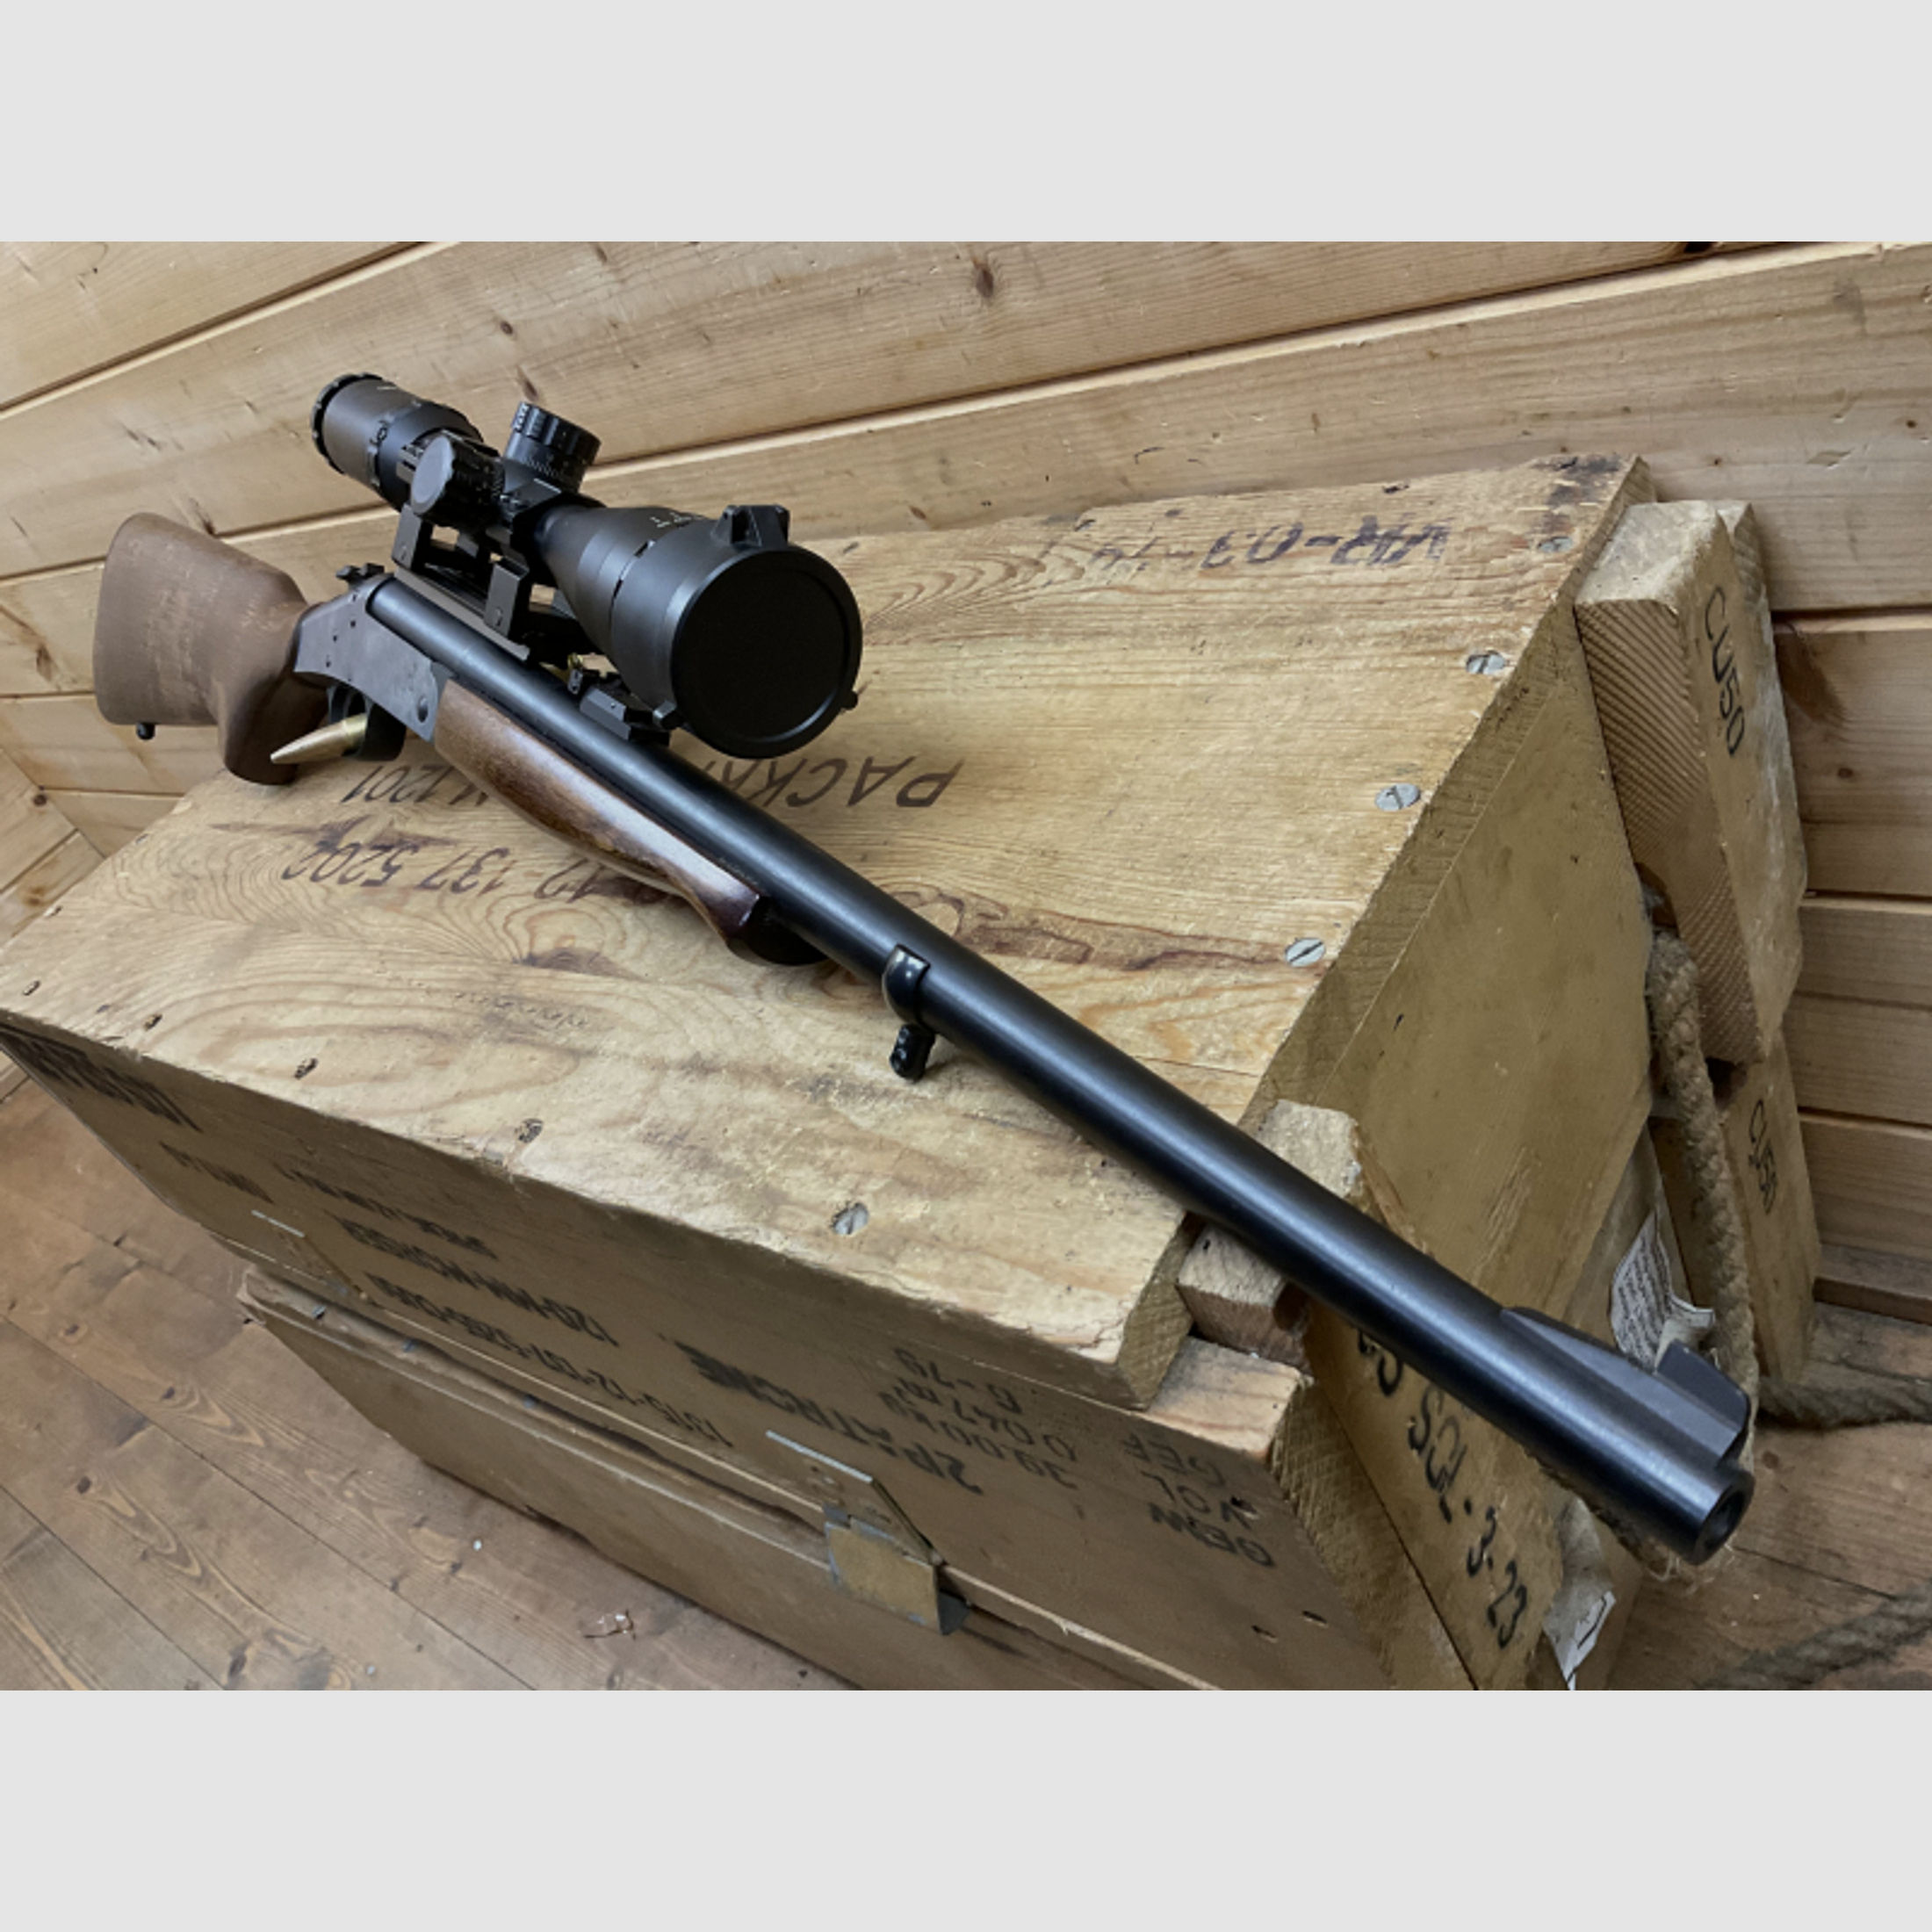 Kipplaufbüchse New England Firearms USA, Mod. SB2, Kal..30-30Win.